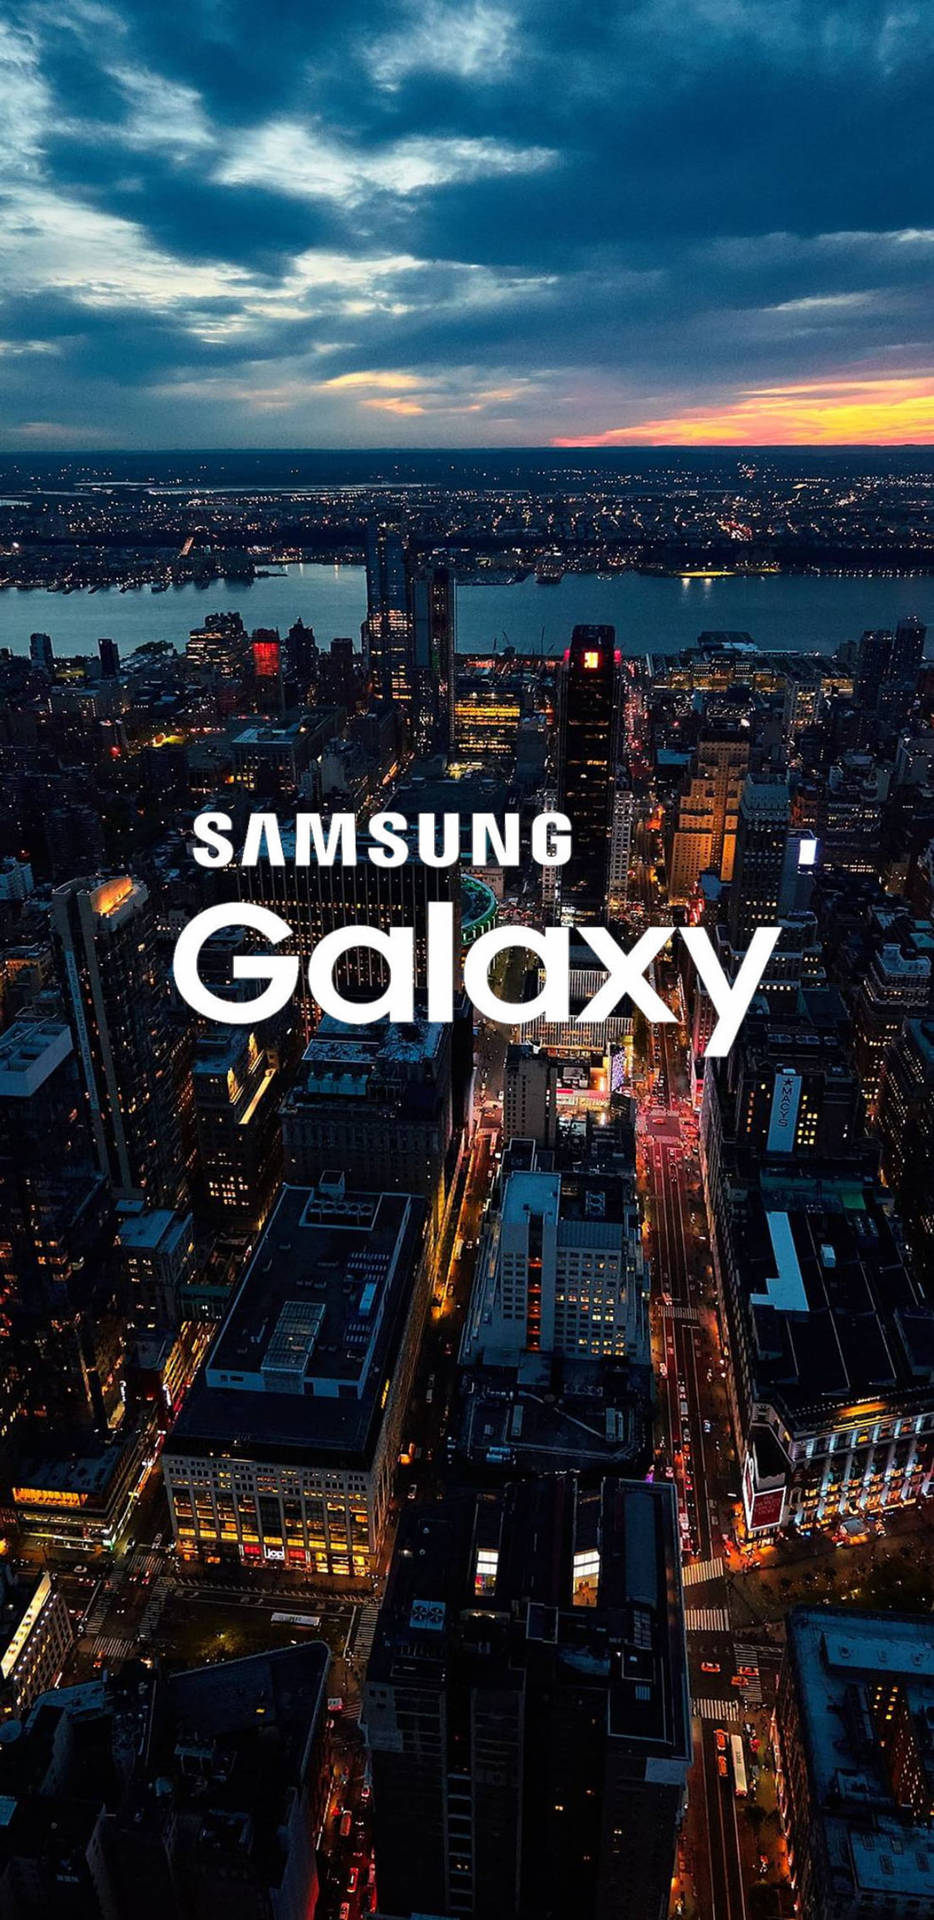 Samsung Galaxy New York City Background